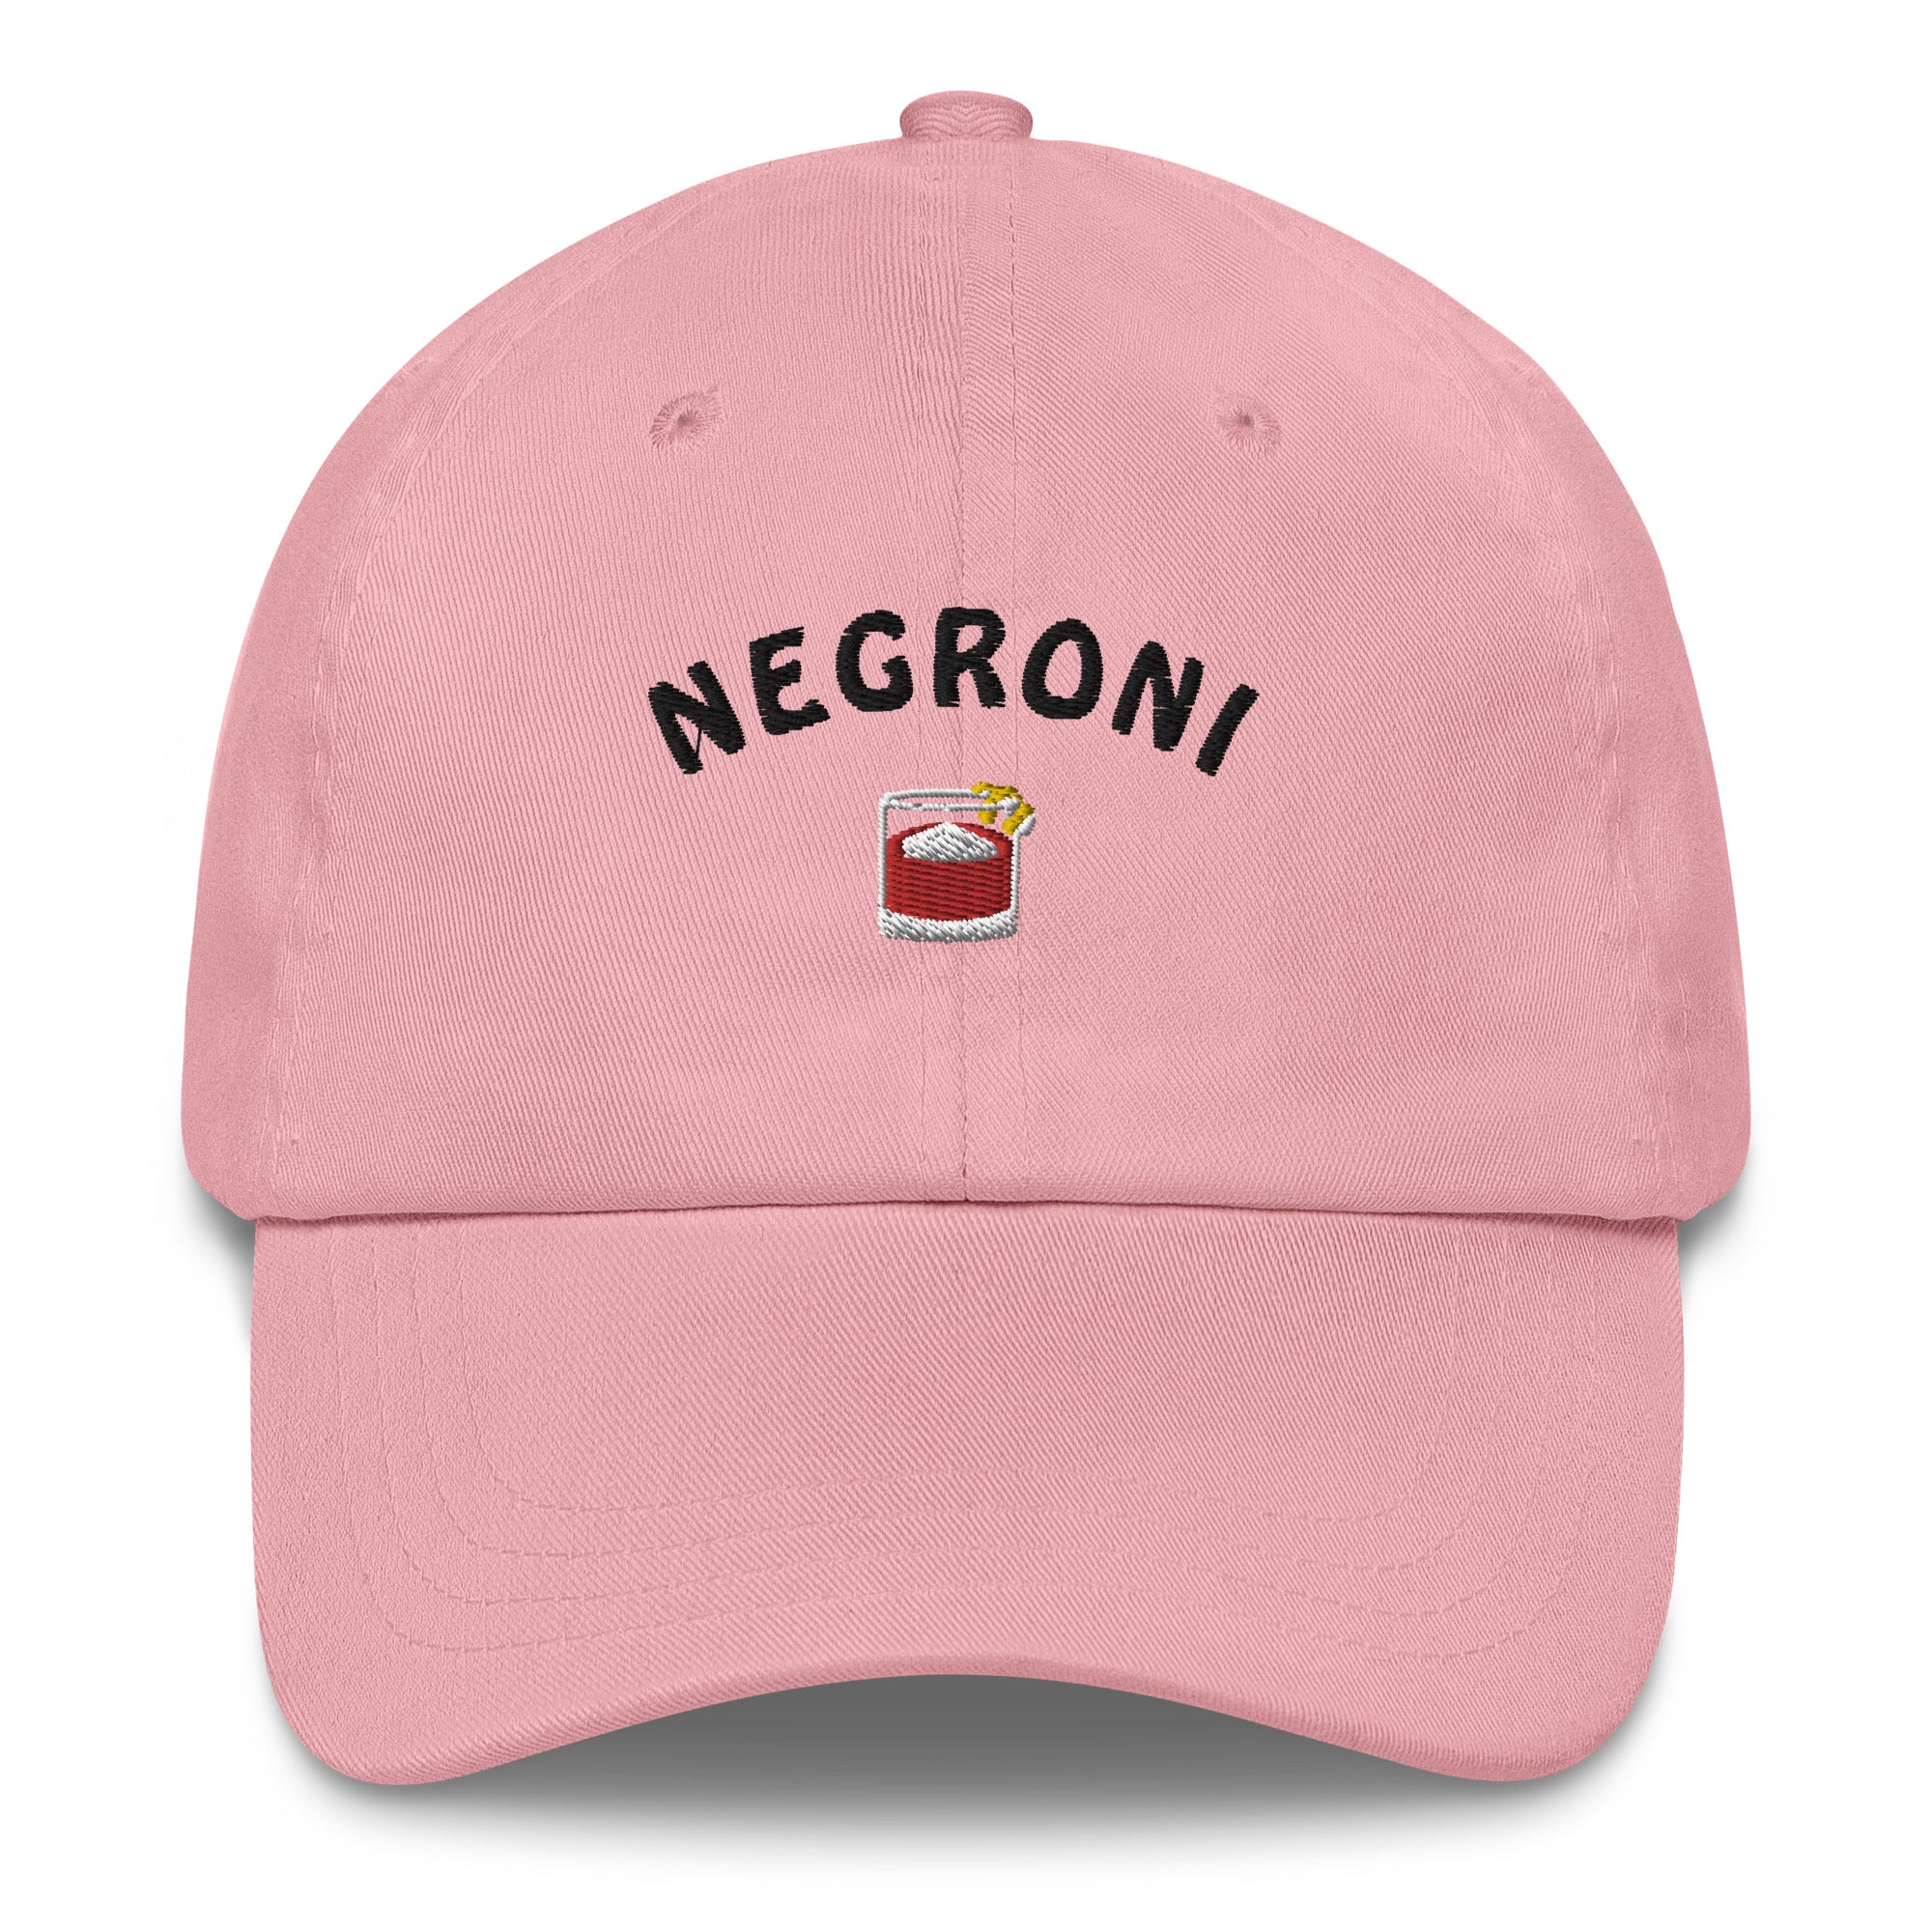 The Negroni - Cap